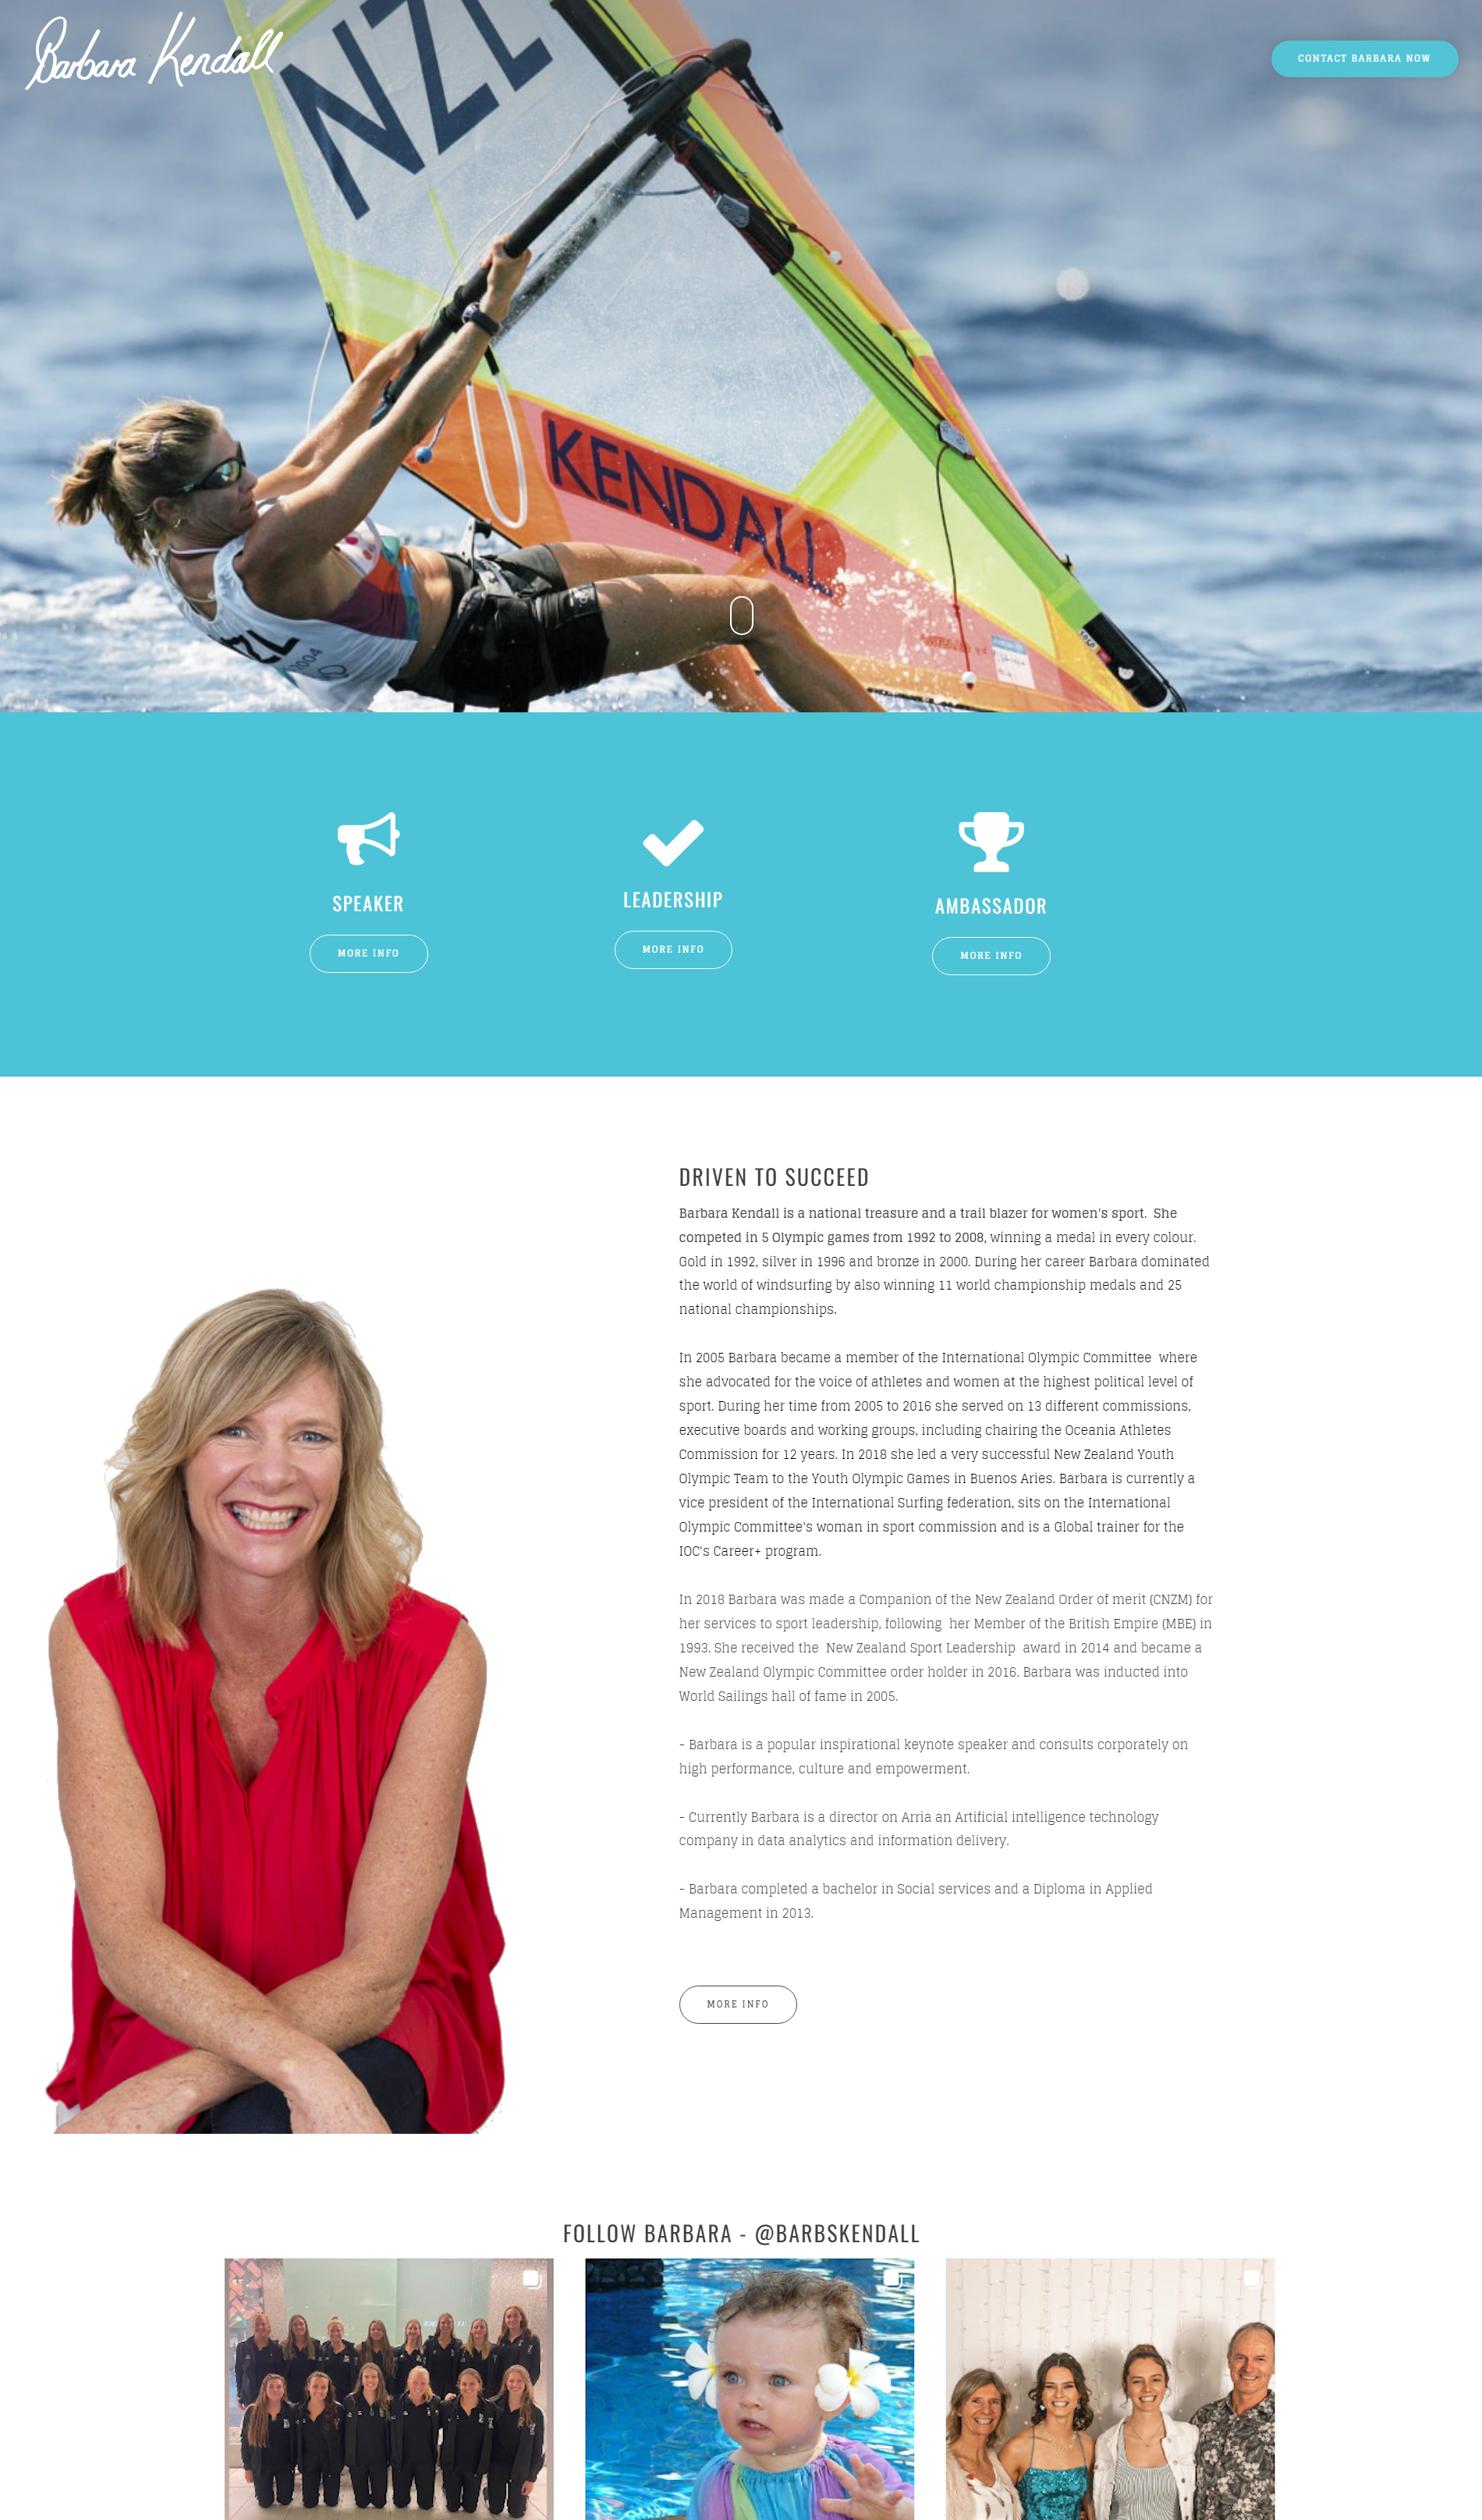 Barbara Kendall website design example for testimonial